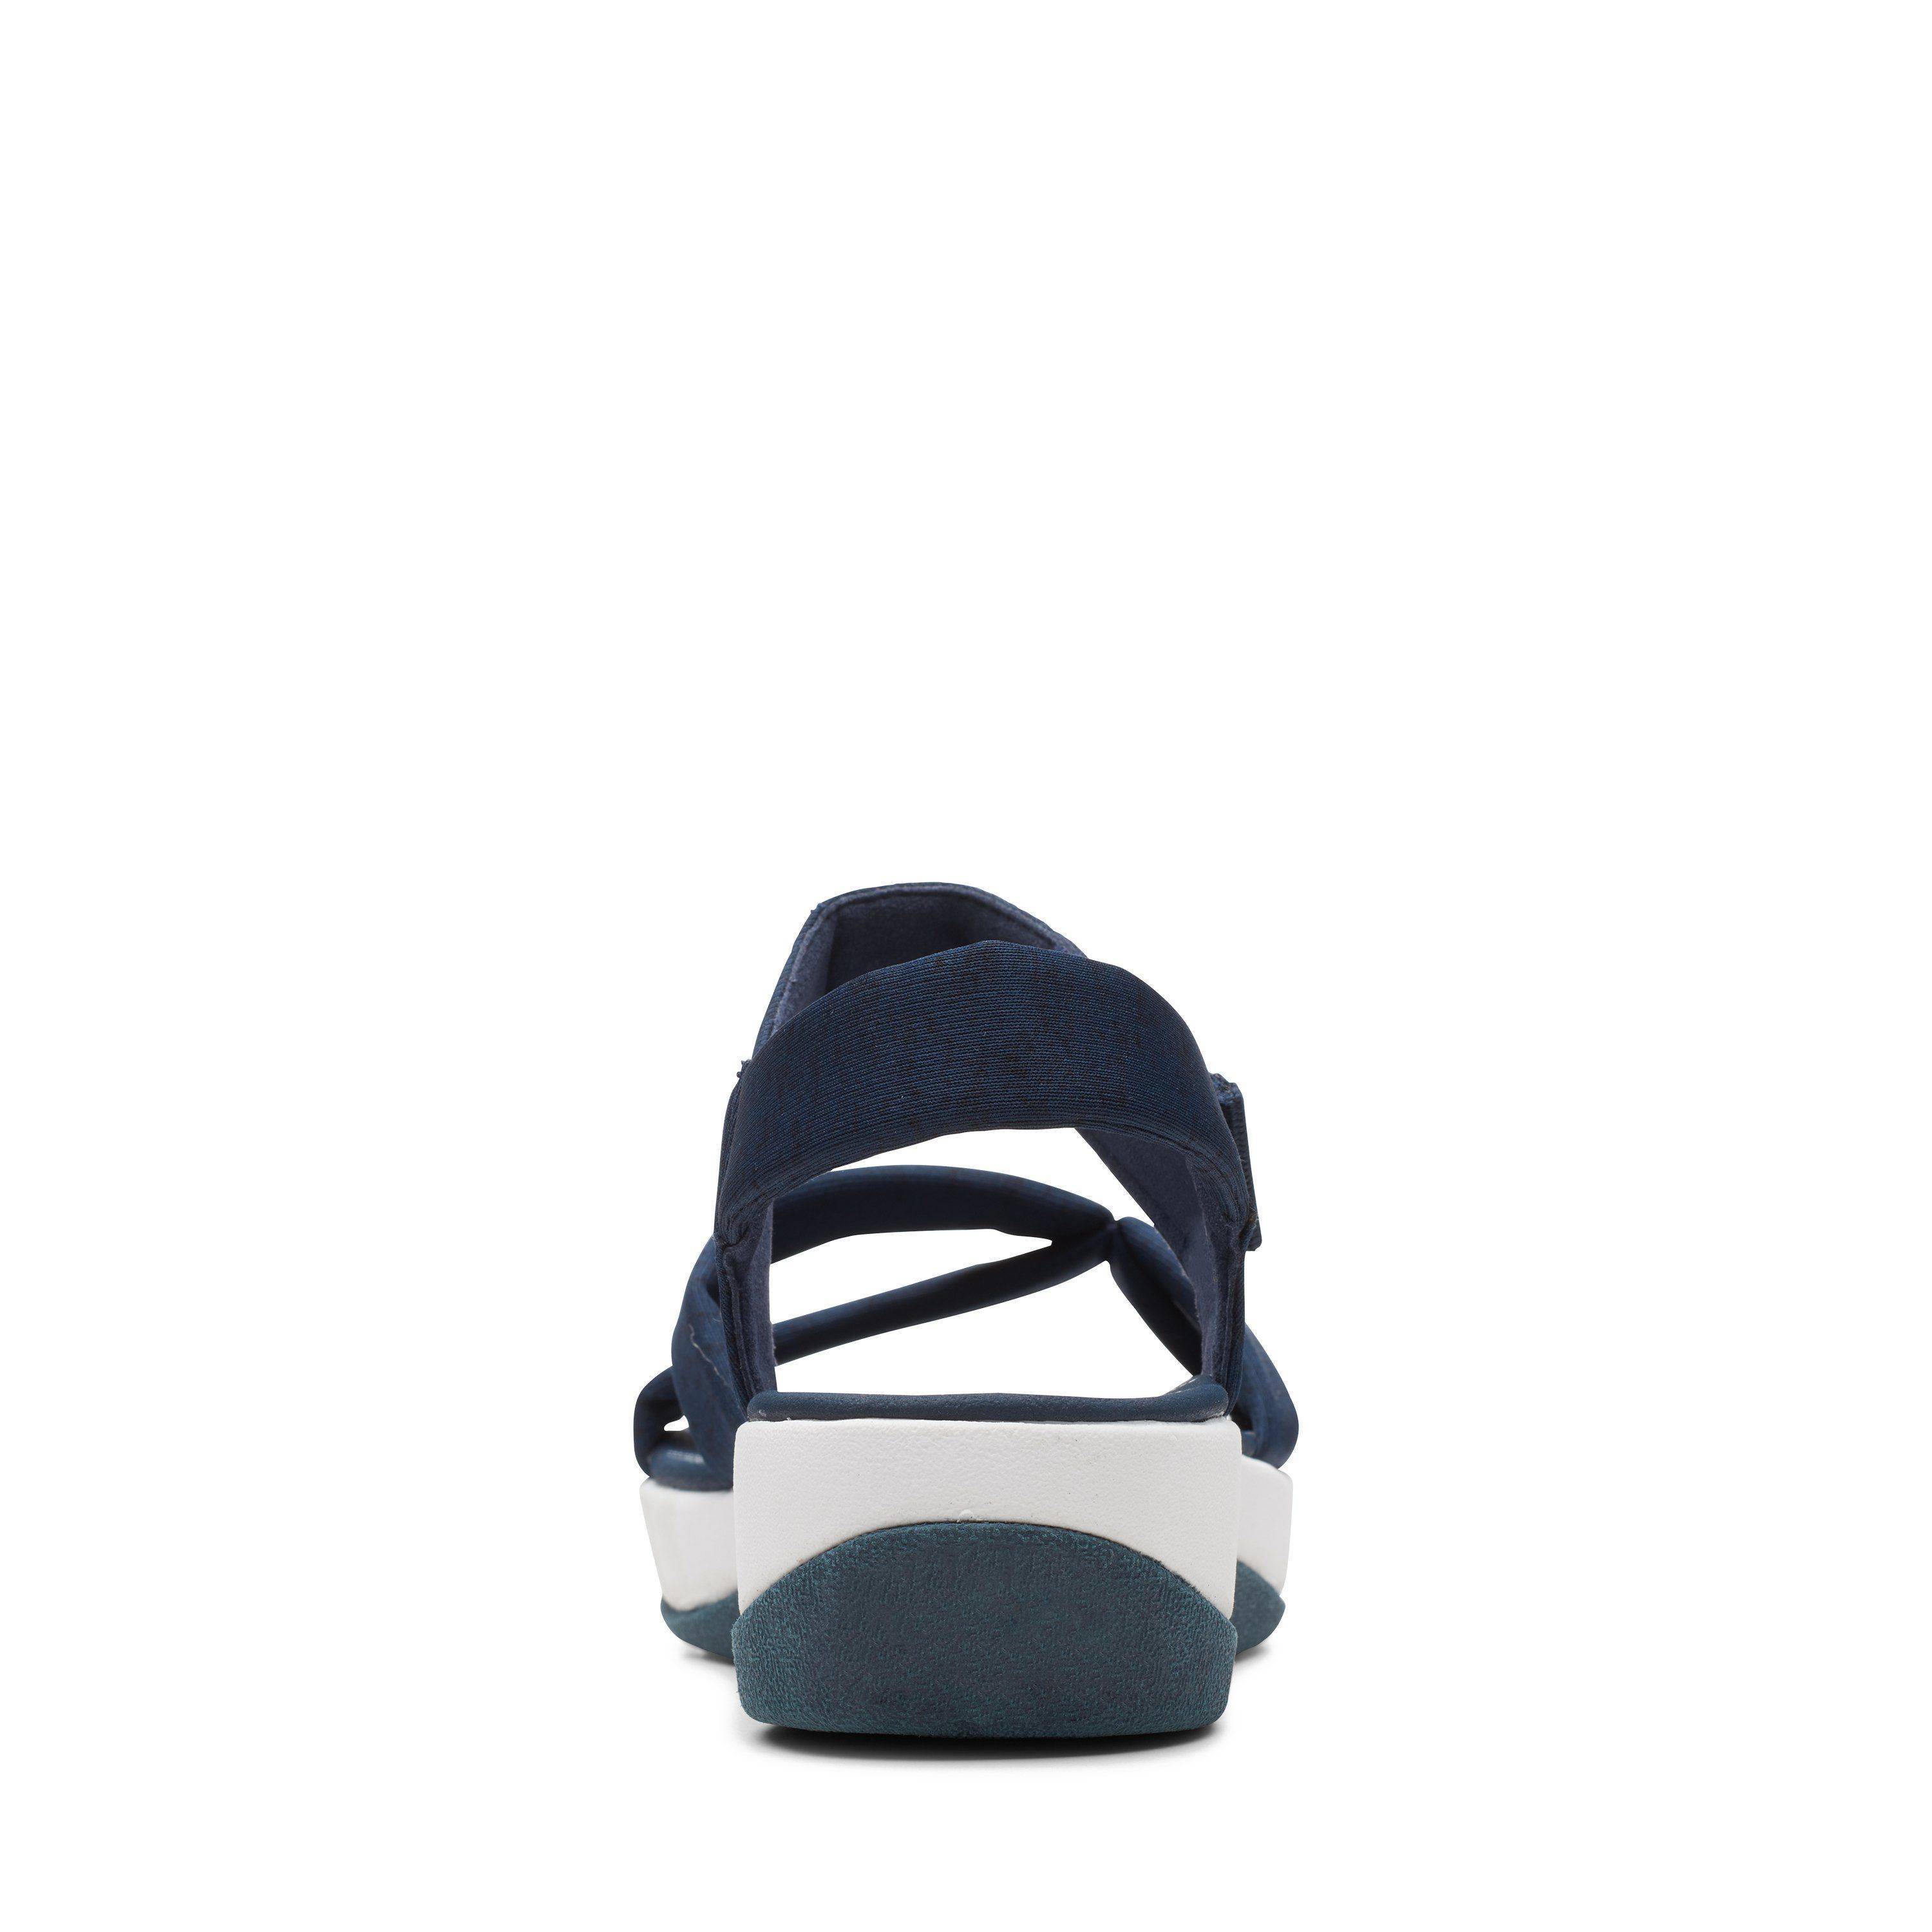 Женские сандалии Clarks, синие, цвет синий, размер 39.5 - фото 6